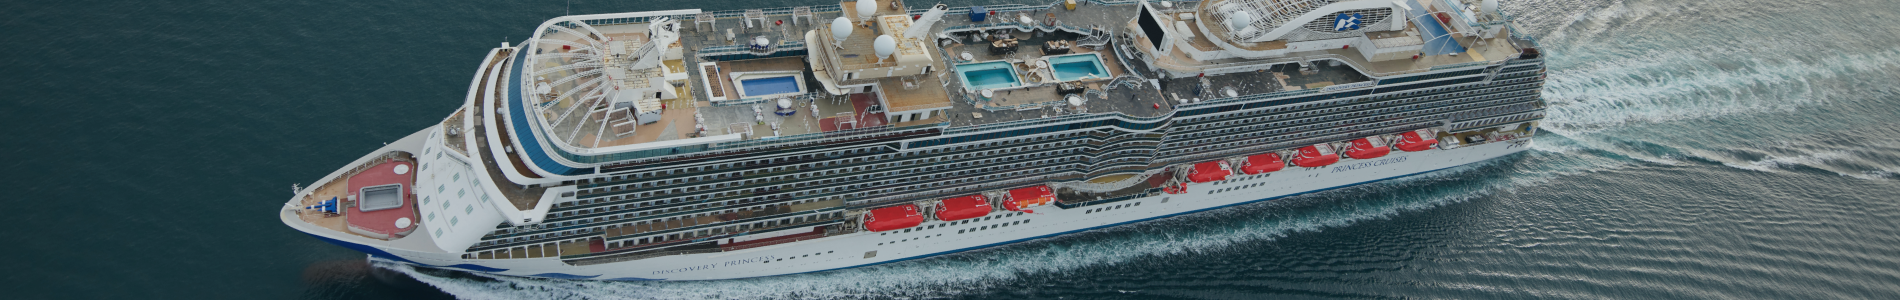 Princess Cruise Lines cruise exchange program